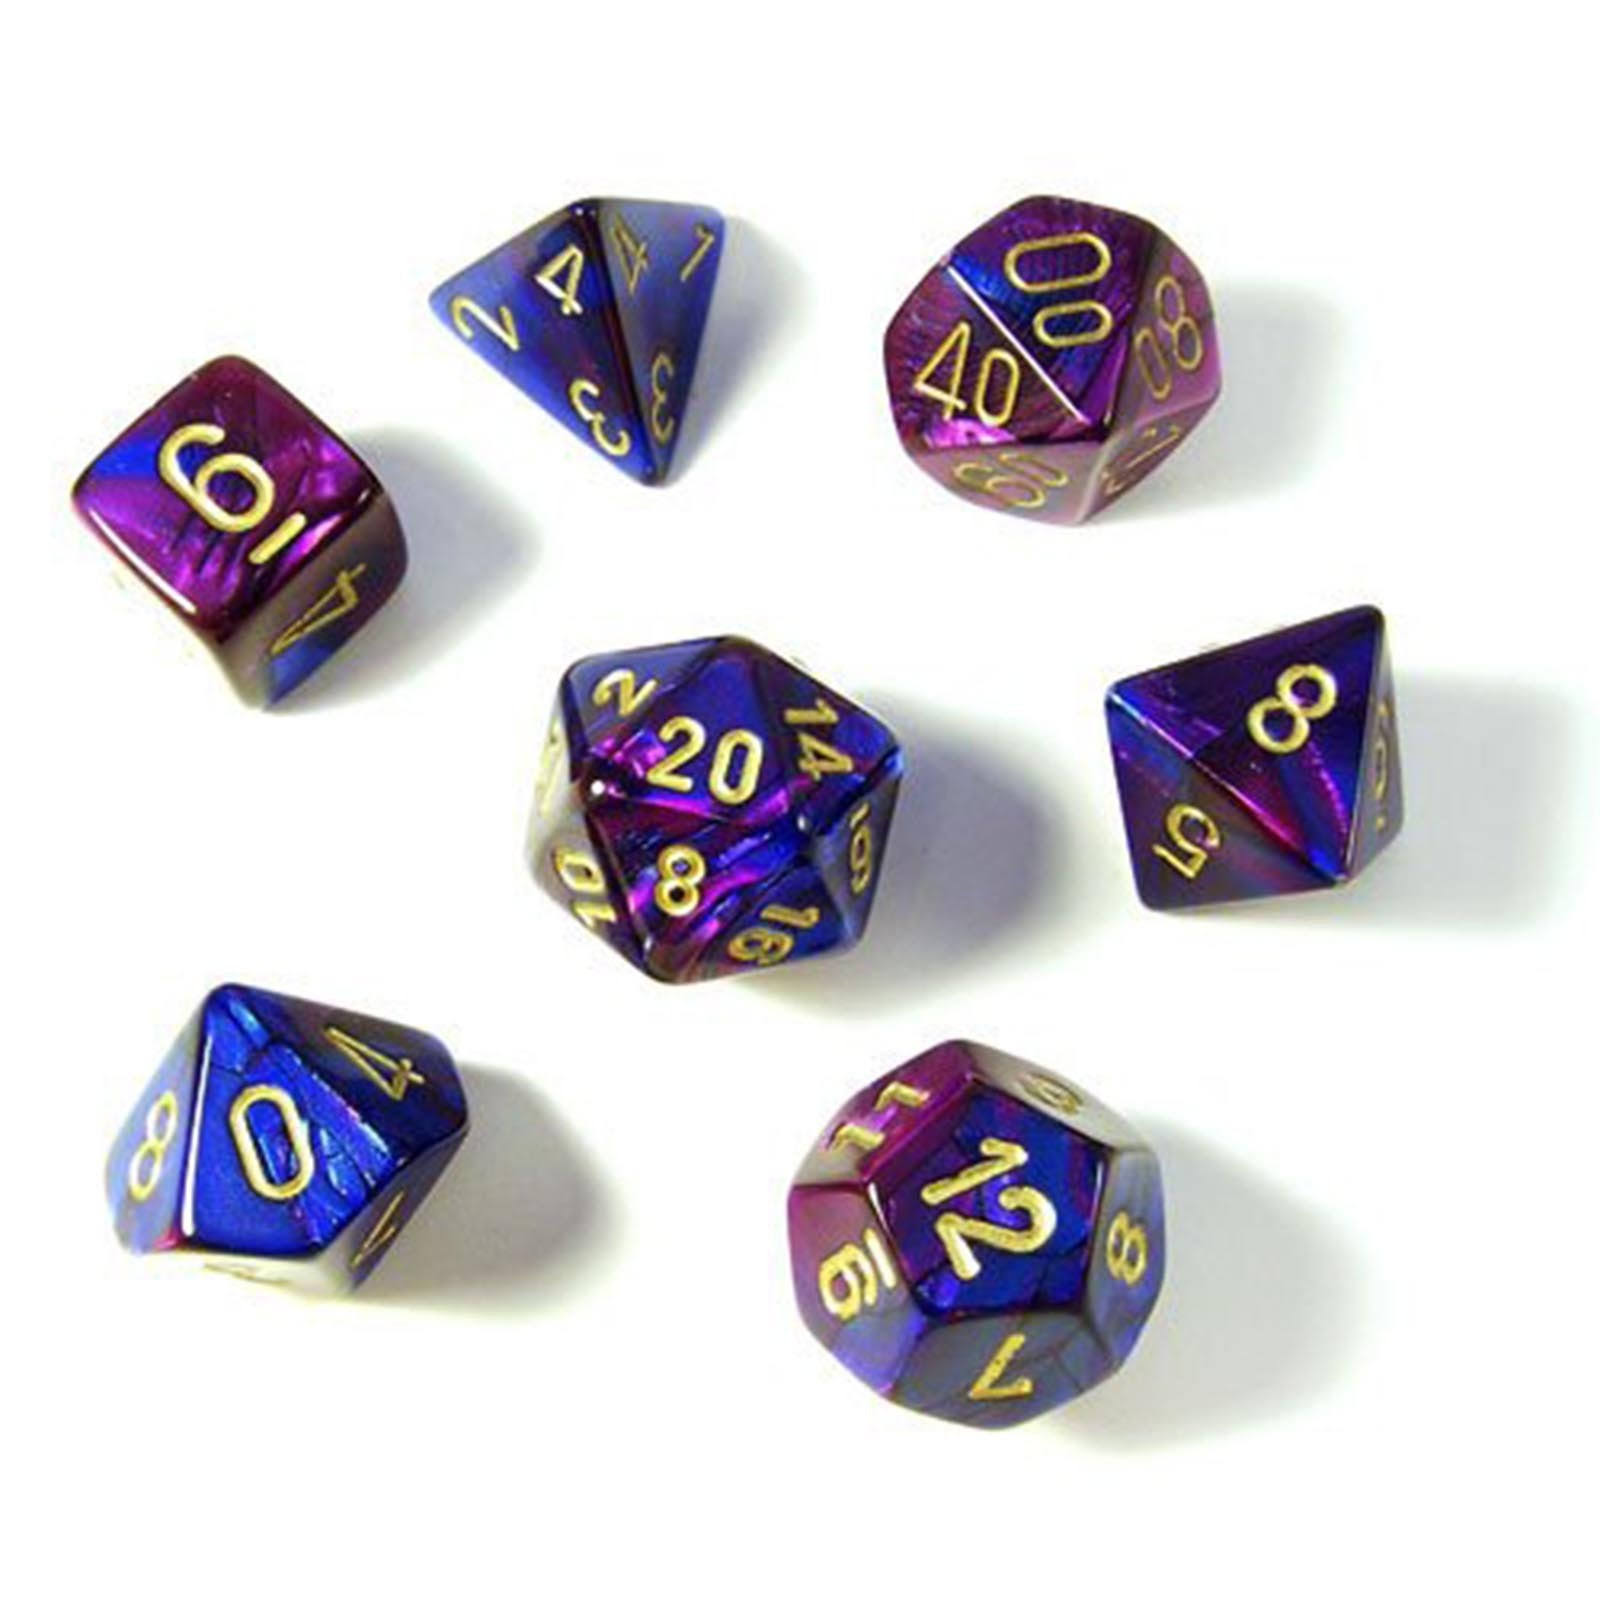 Chessex Gemini Poly 7 Dice Set: Blue-purple/gold